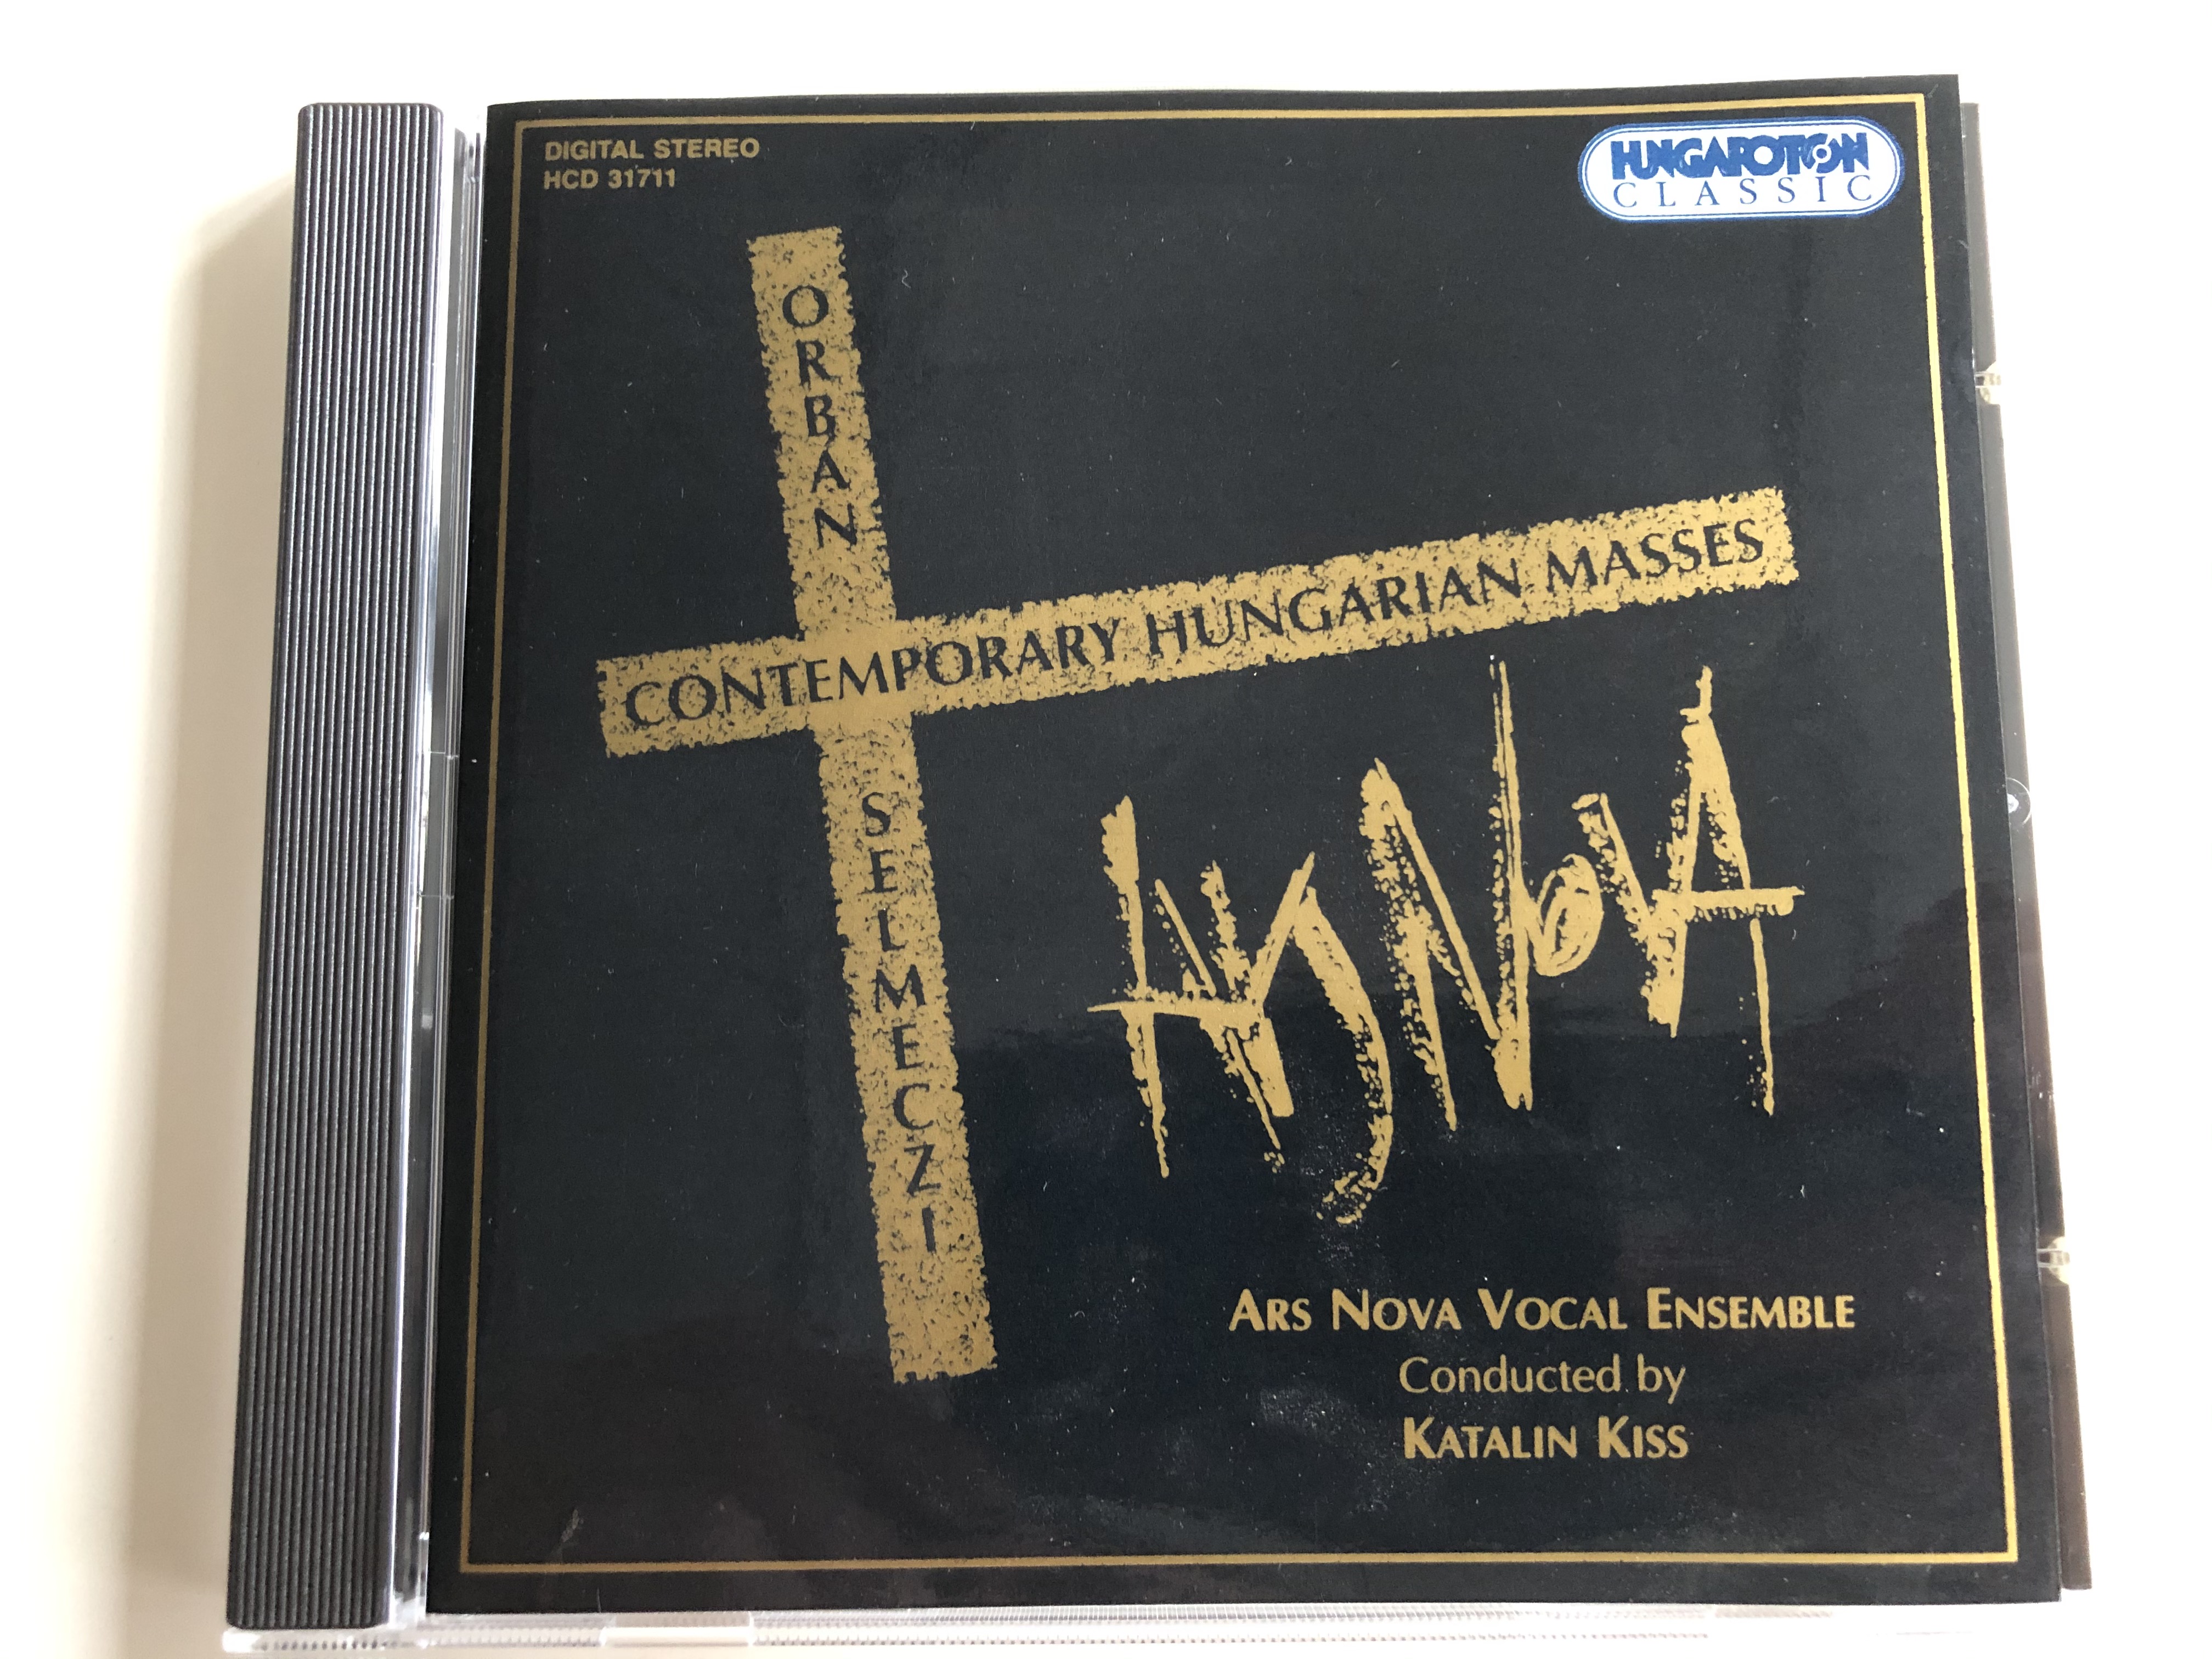 orb-n-selmeczi-contemporary-hungarian-masses-ars-nova-vocal-ensemble-conducted-katalin-kiss-hungaroton-classic-audio-cd-1997-stereo-hcd-31711-1-.jpg